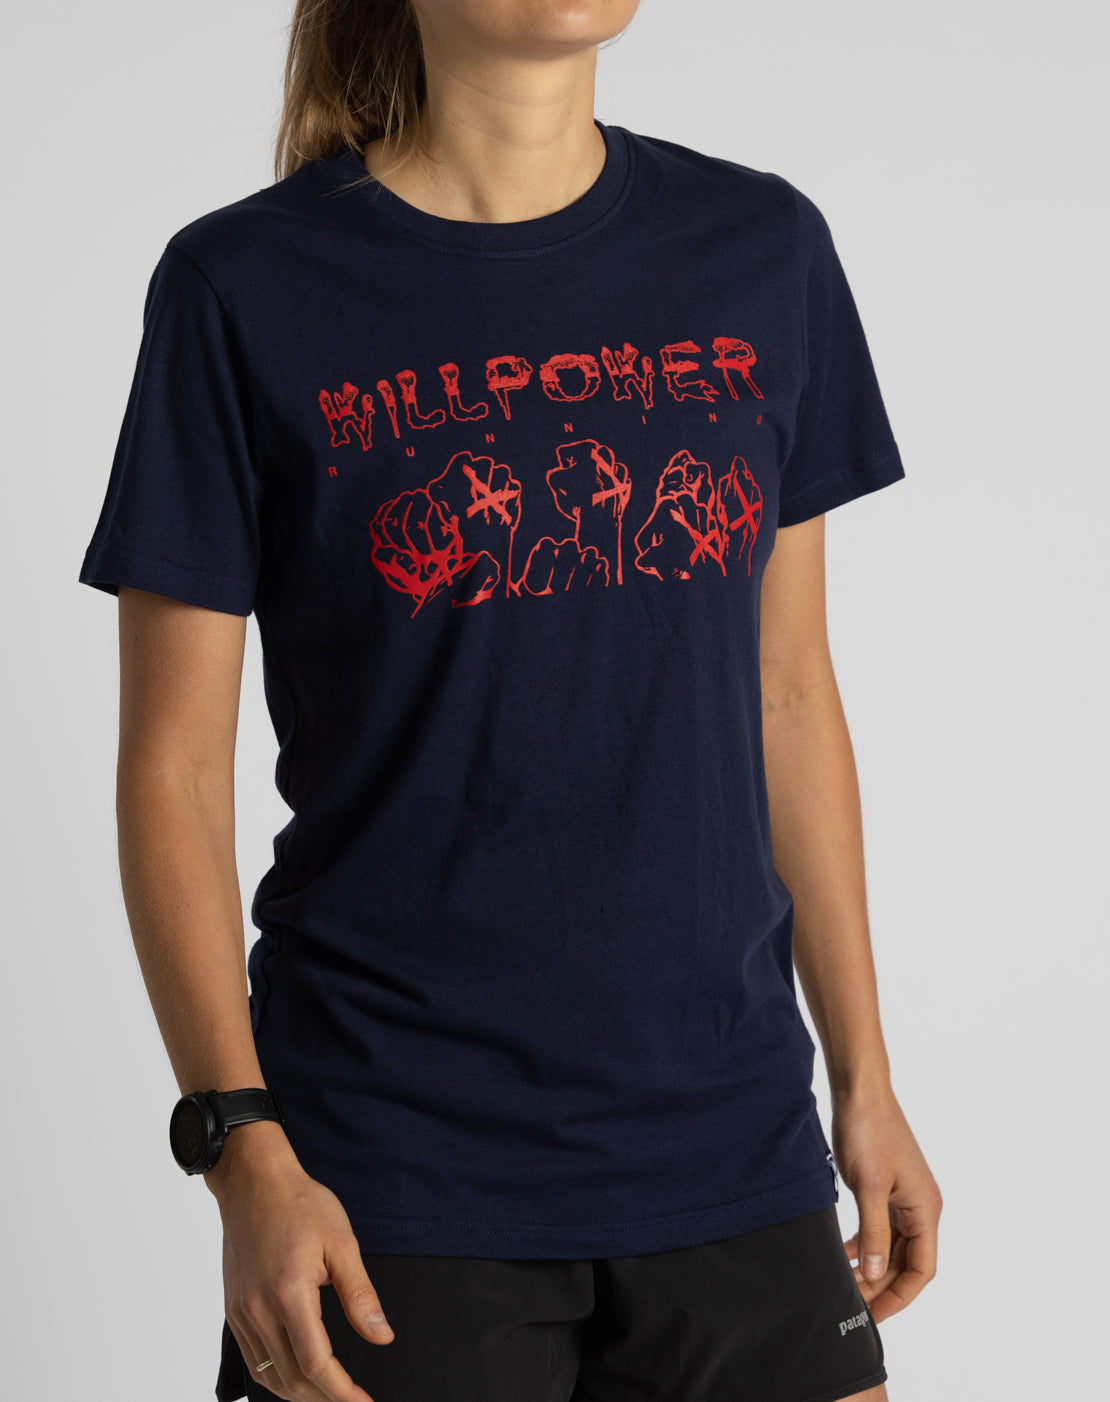 Willpower "Straight Edge" Athleisure T-Shirt (Ltd. Navy)